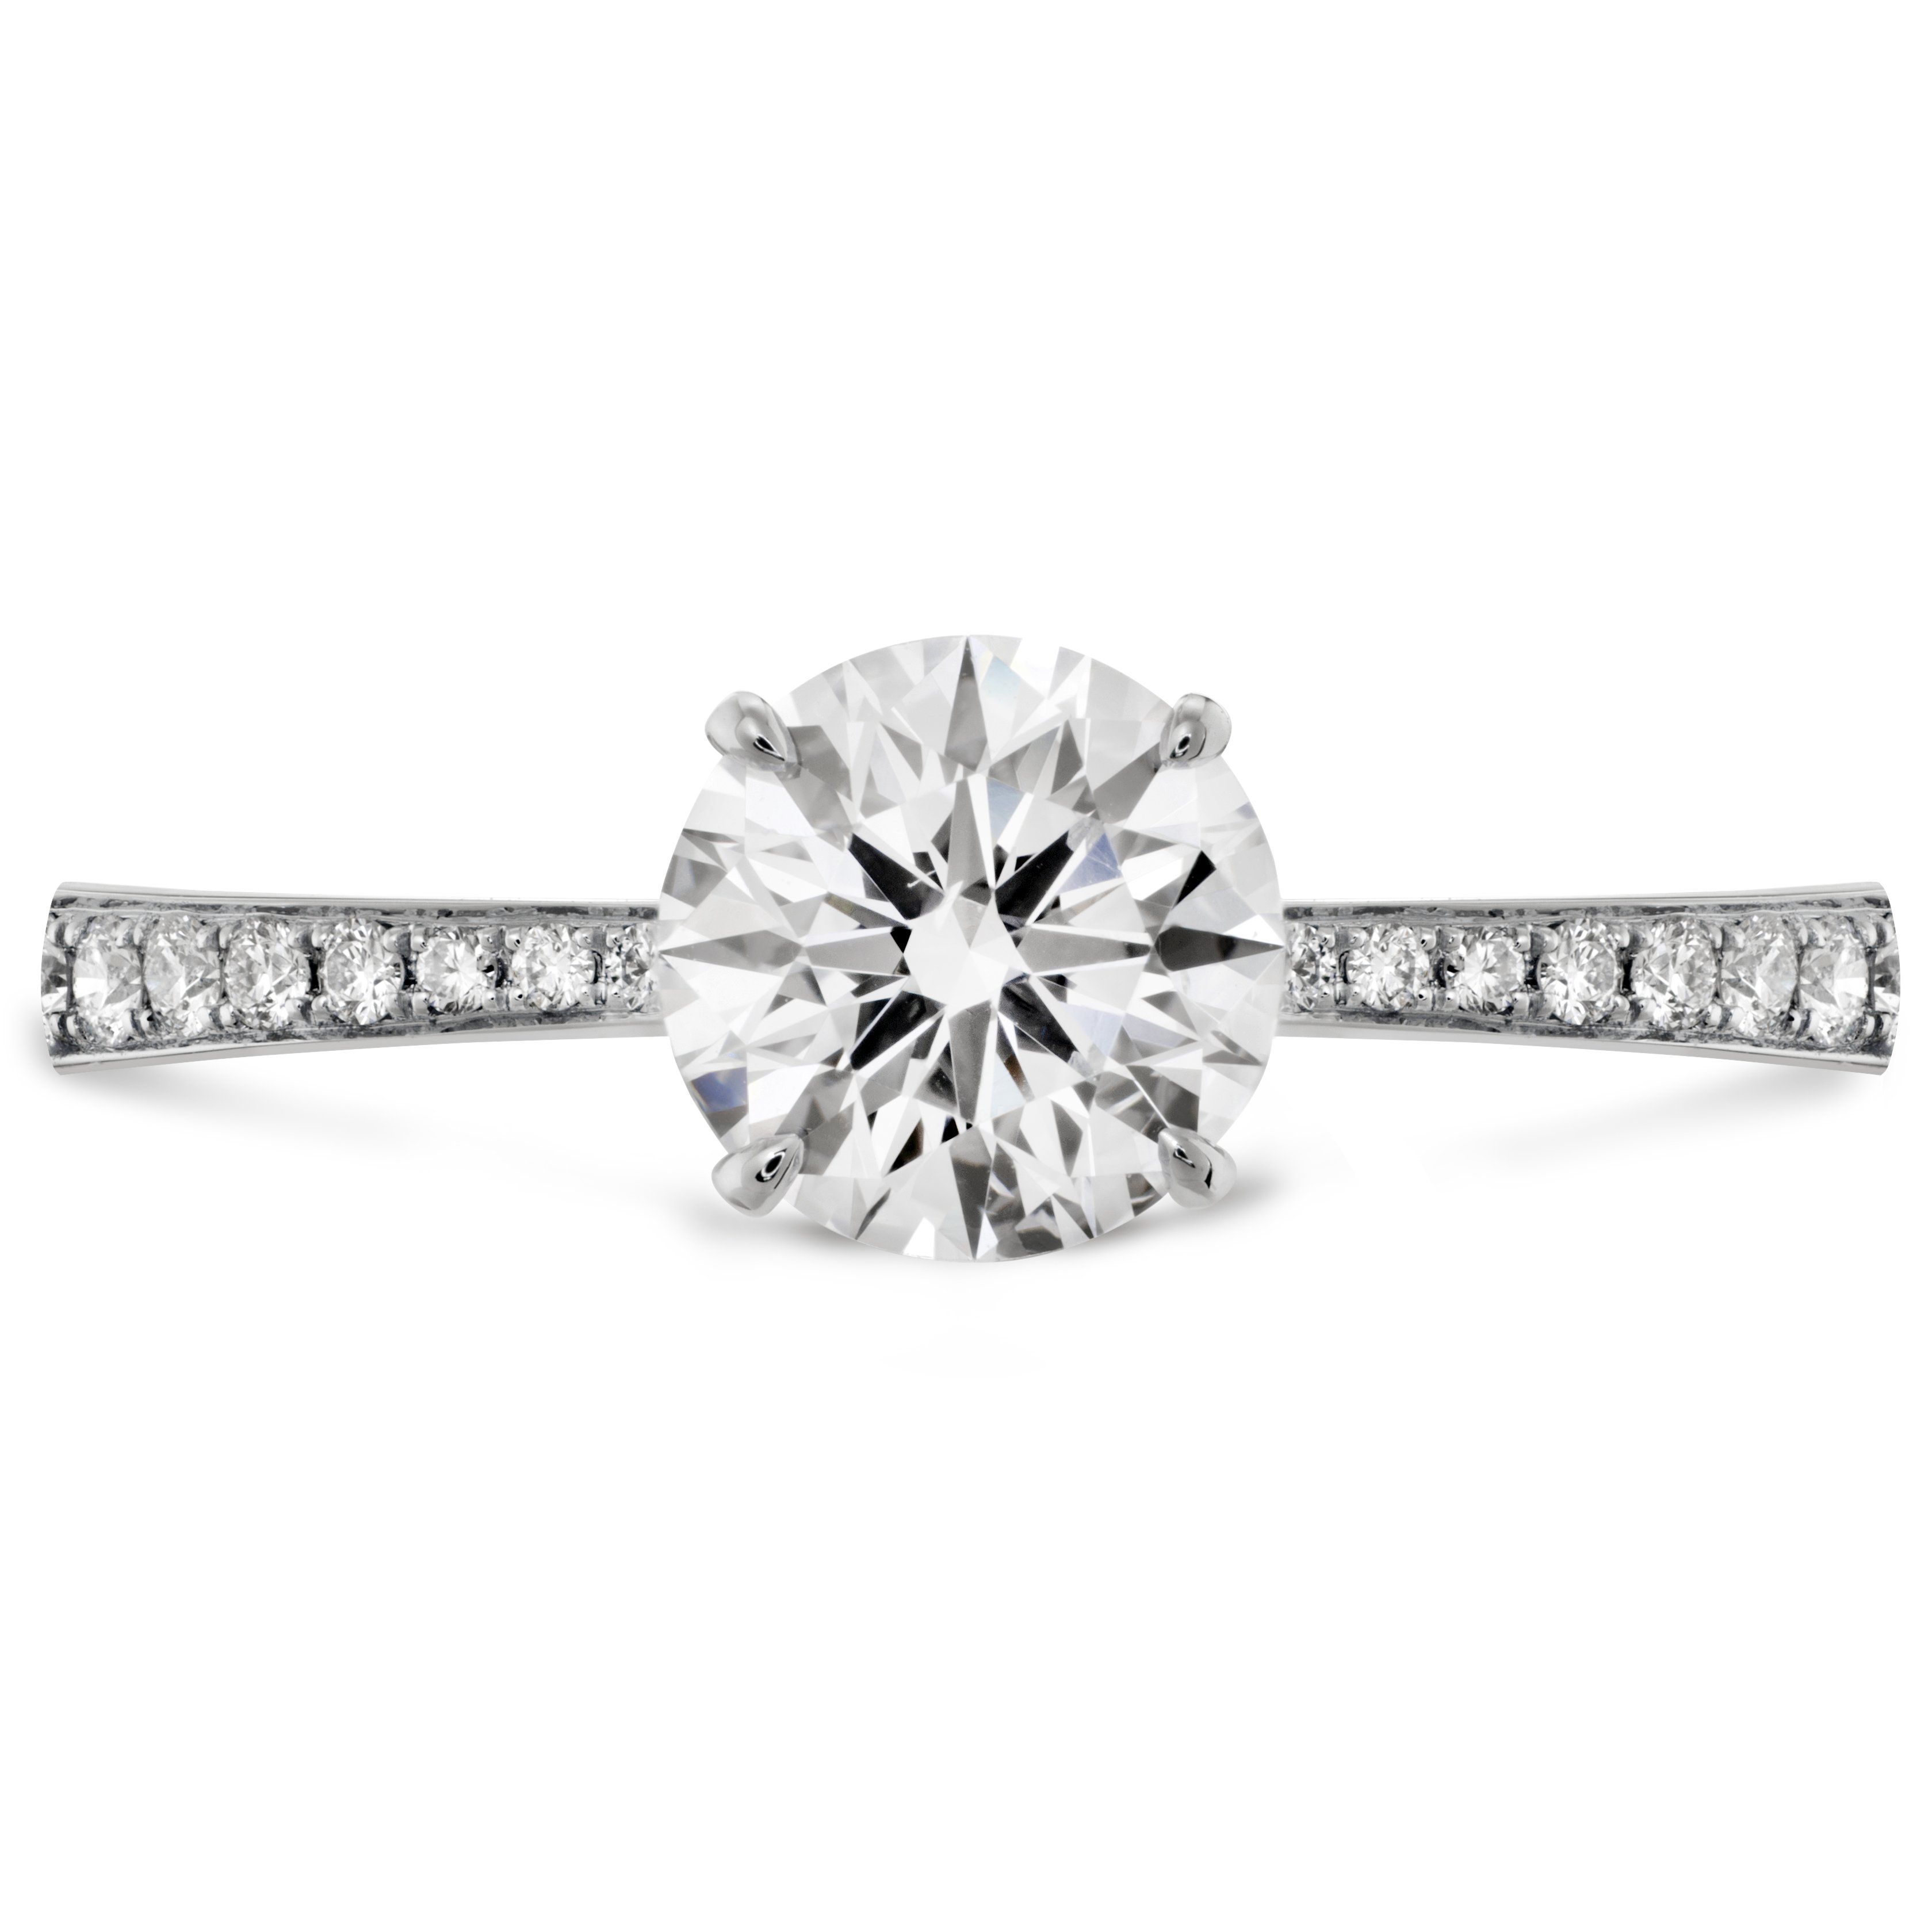 https://www.arthursjewelers.com/content/images/thumbs/Original/HOF Signature Ring-19361870.jpg